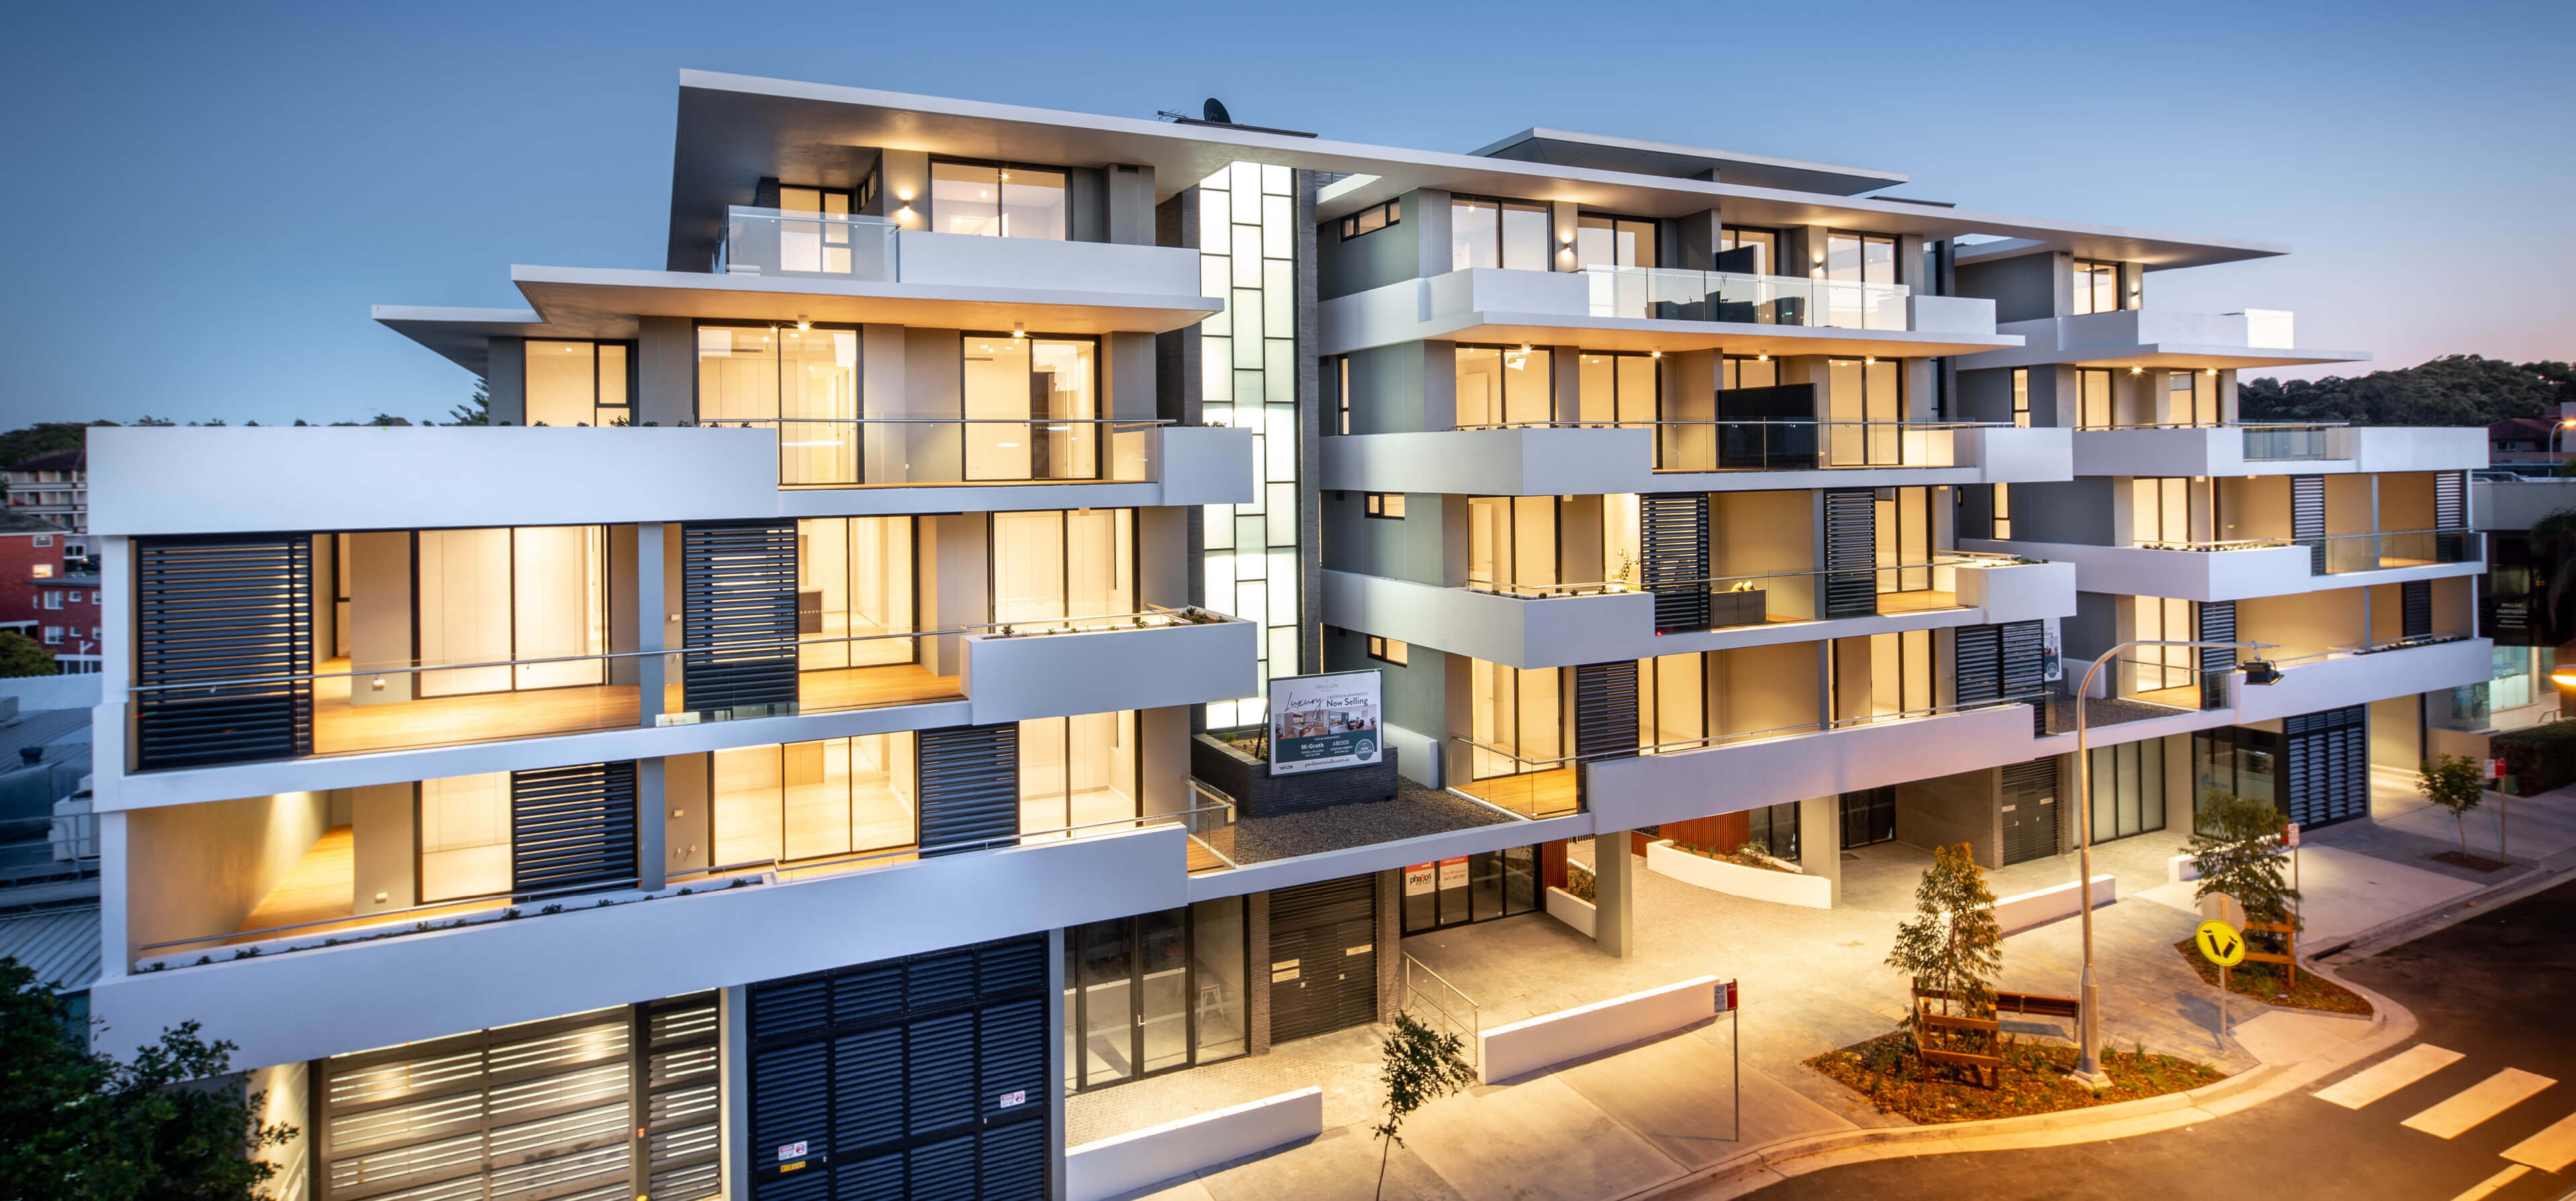 15 exterior night alternativepavilion apartments cronulla taylor construction residential